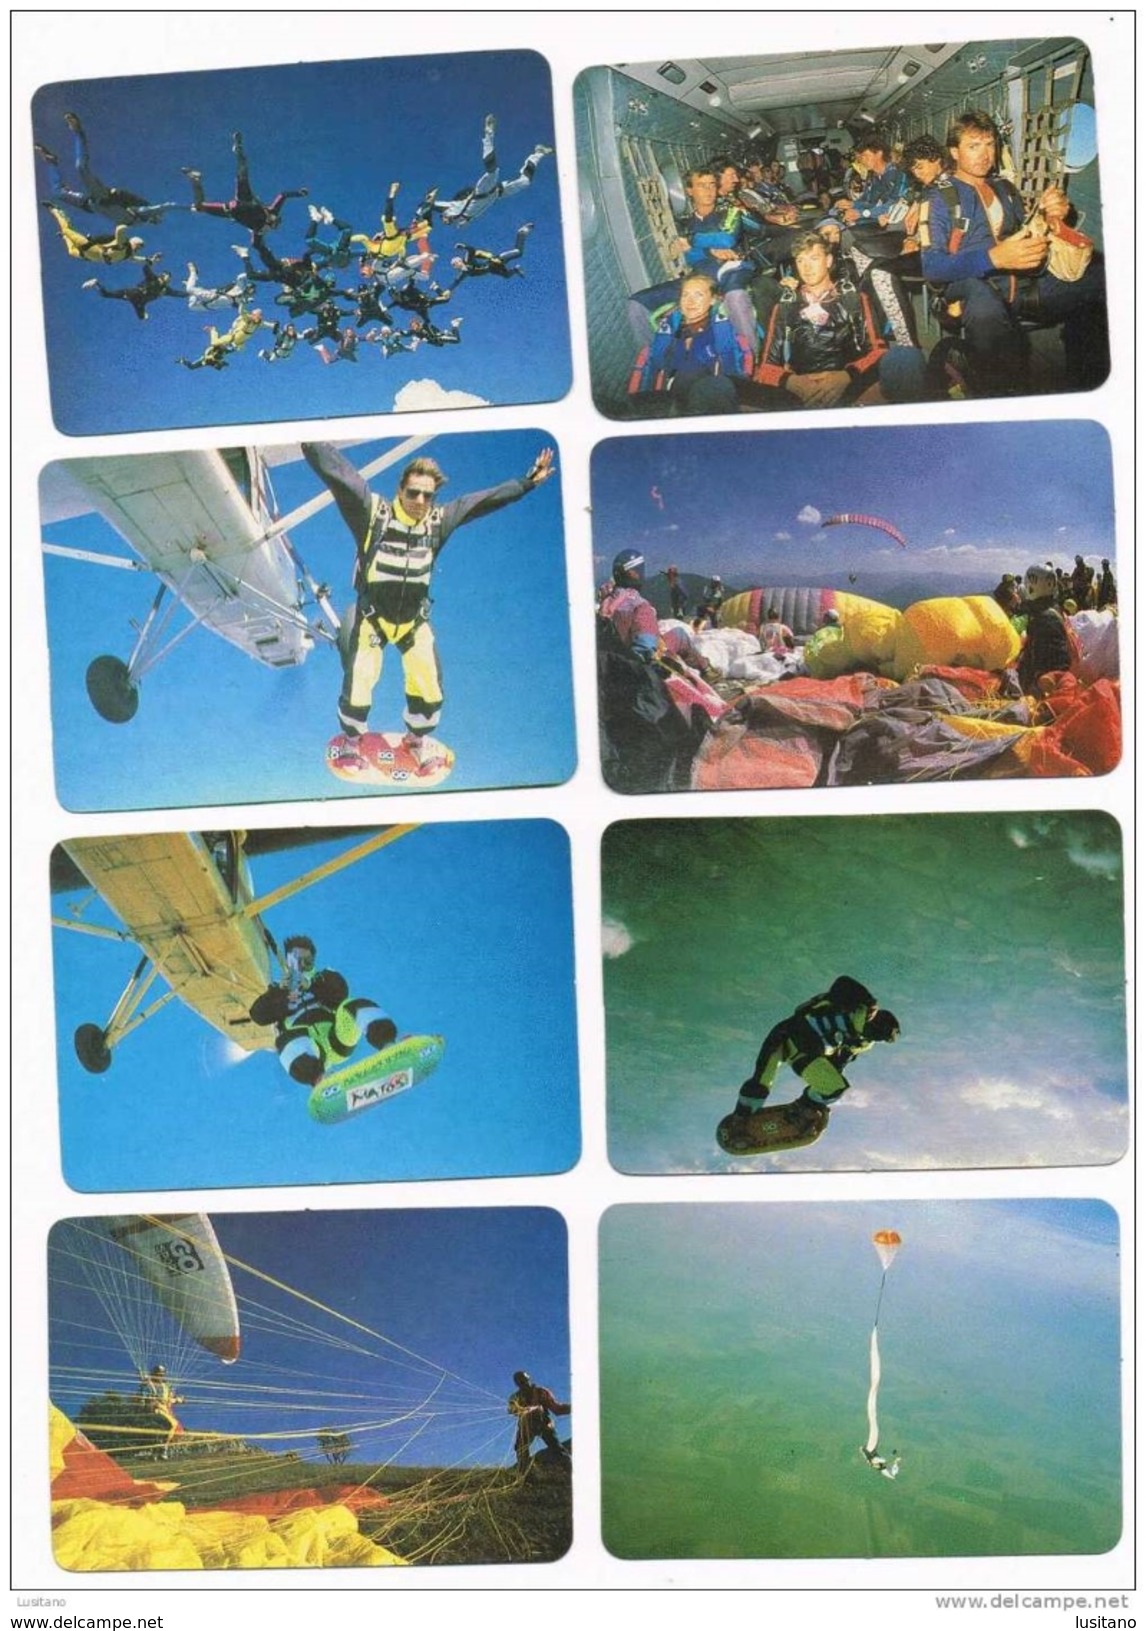 75 calendars calendriers calendarios Parachutisme Collection complète Portugal 1993  Parachuting Helicopter Hélicoptère